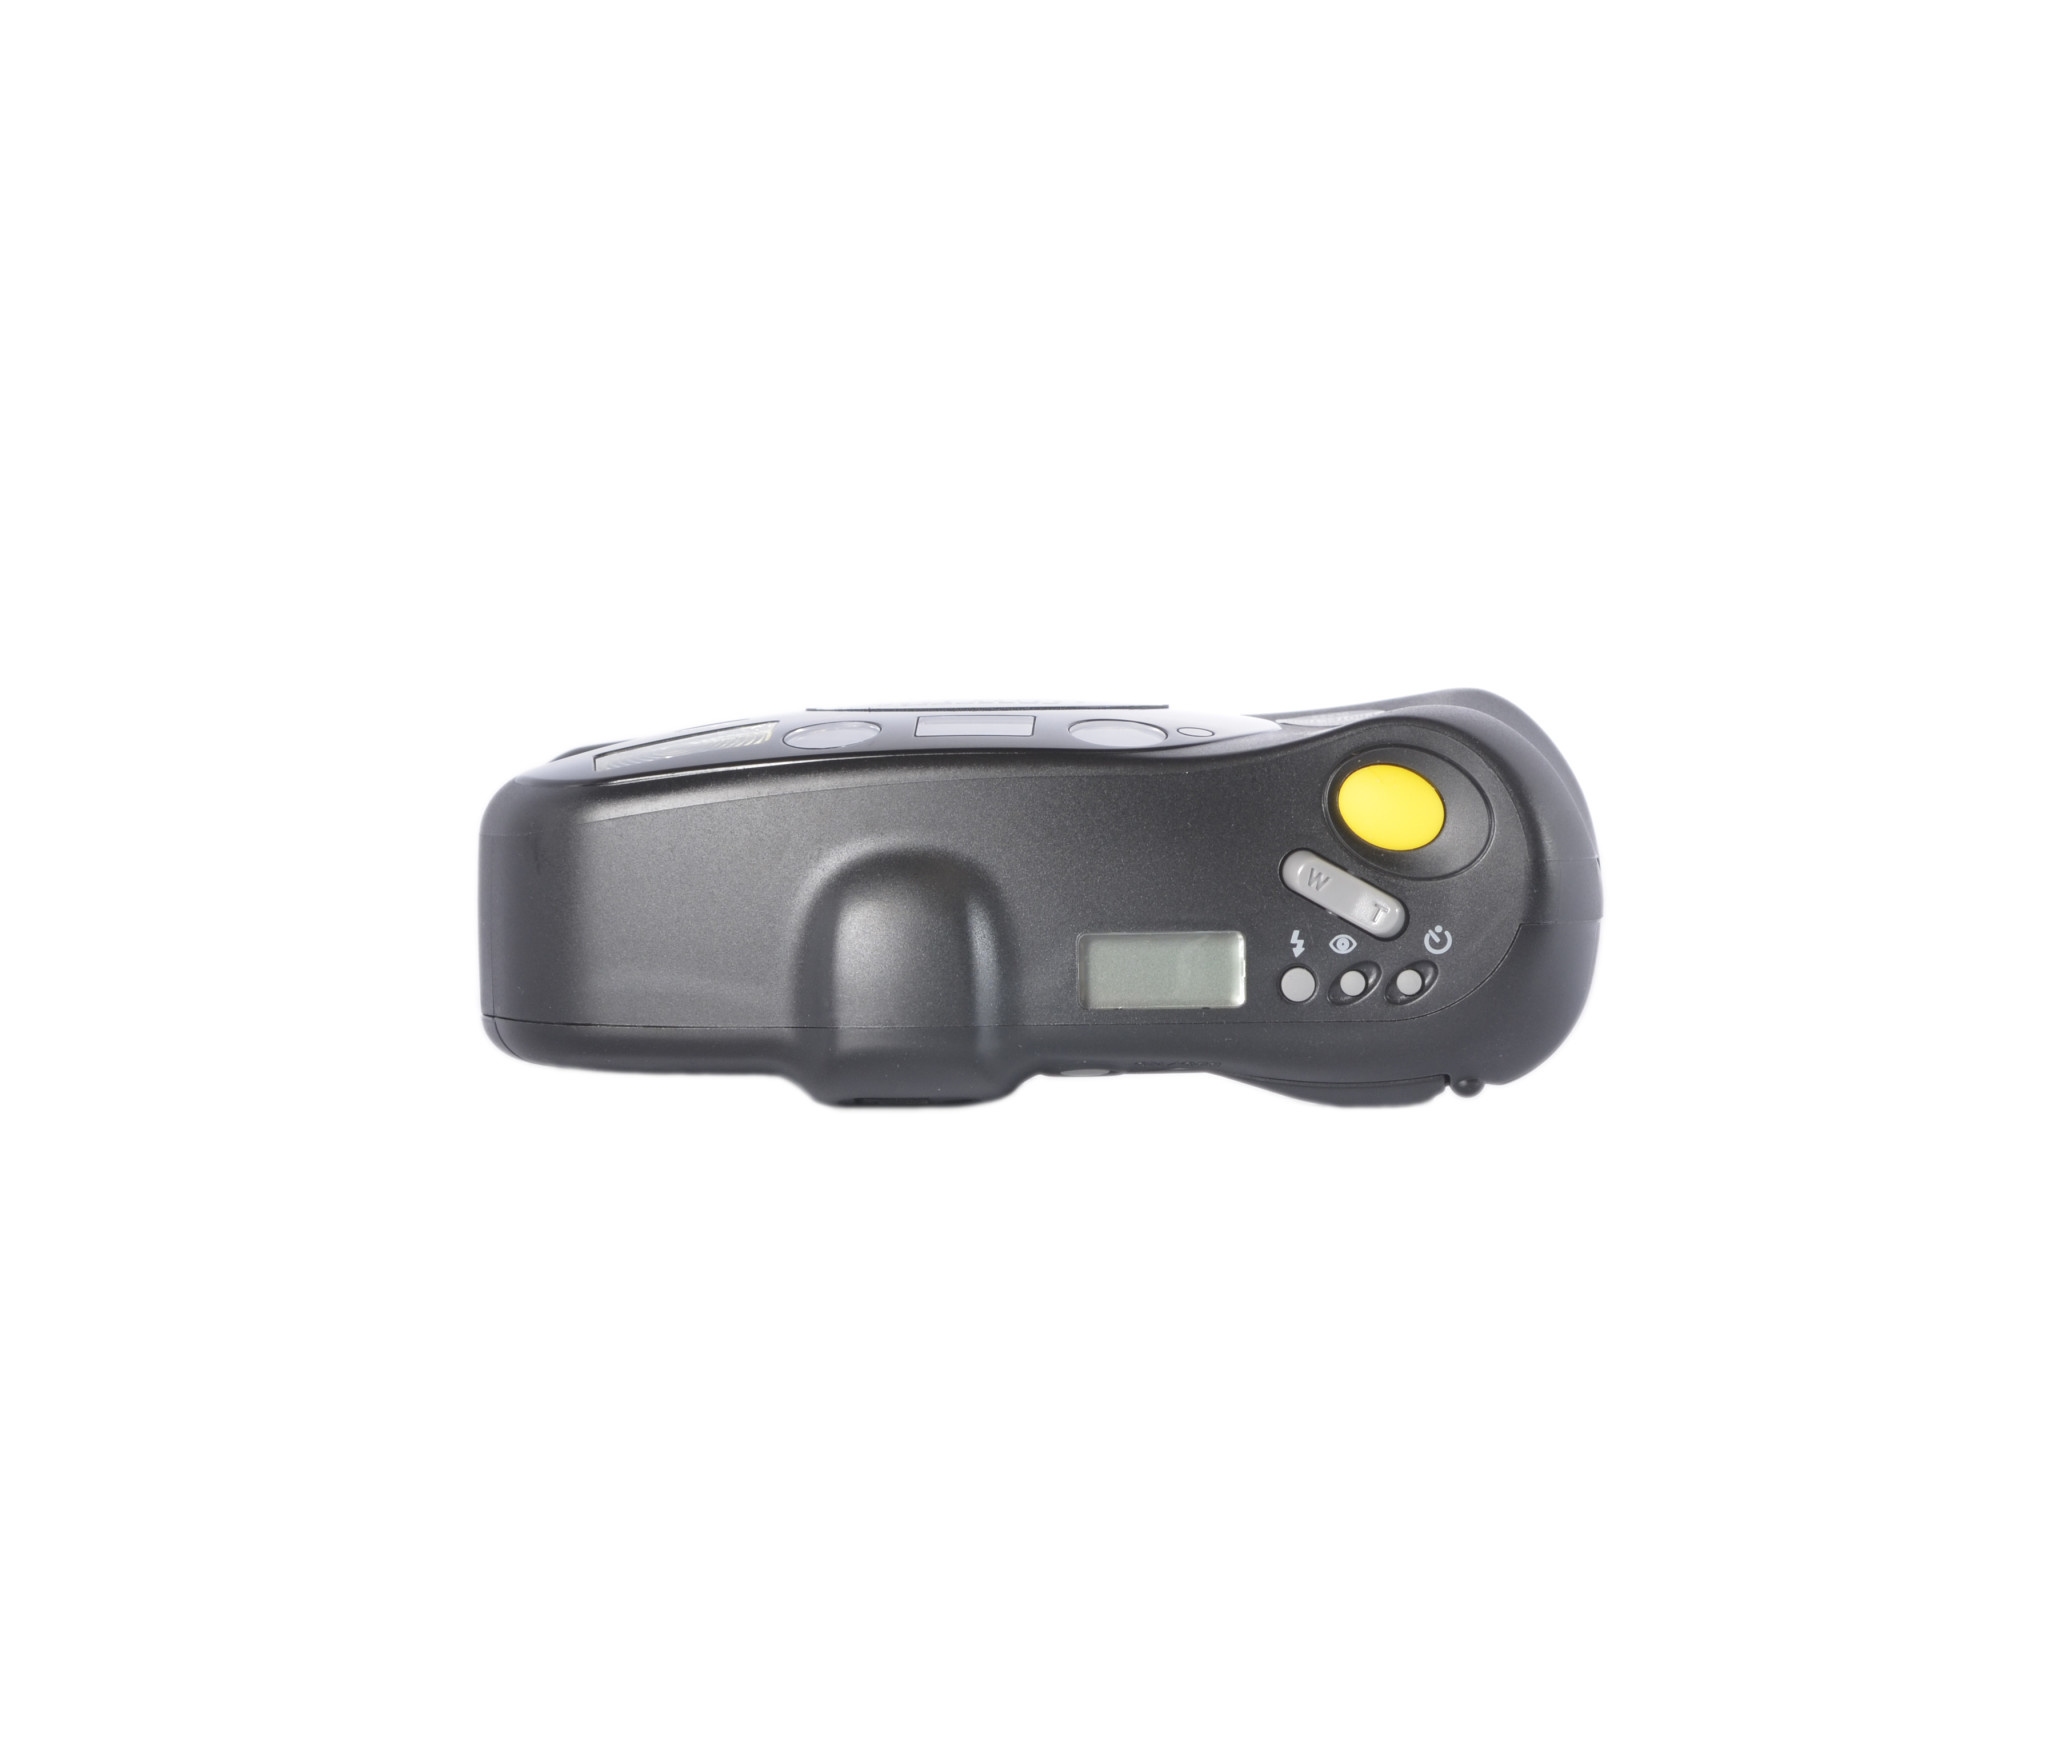 Minolta Freedom Action Zoom - LeZot Camera | Sales and Camera Repair |  Camera Buyers | Digital Printing